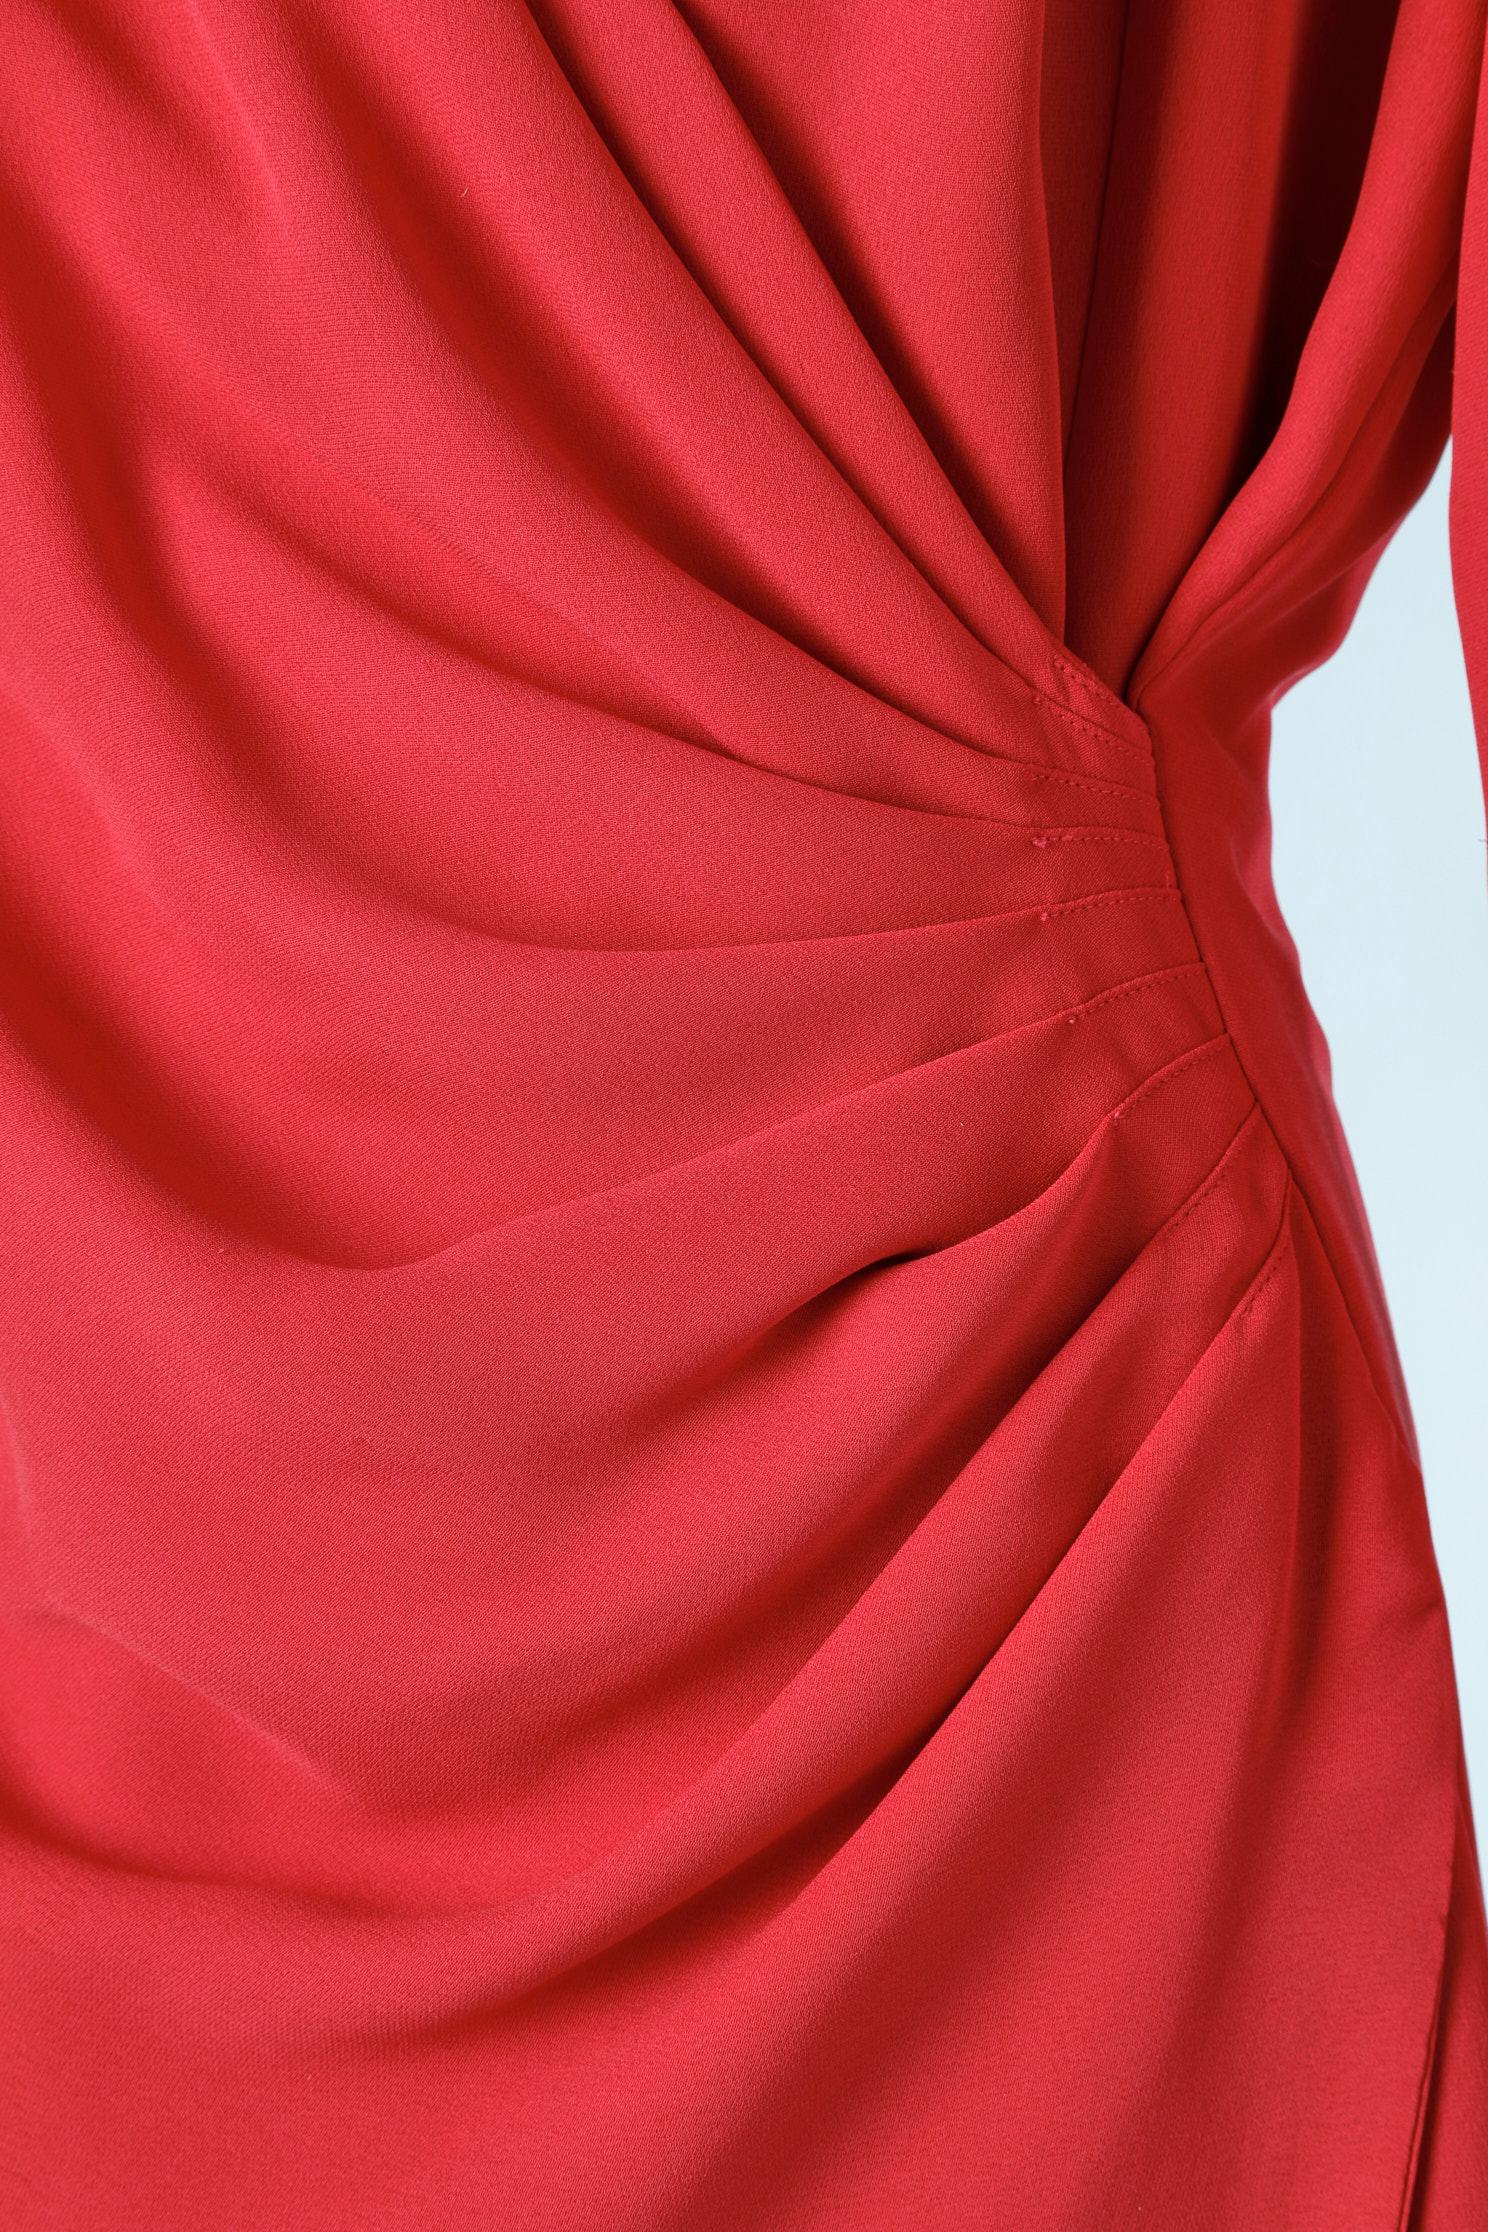 red crepe dress